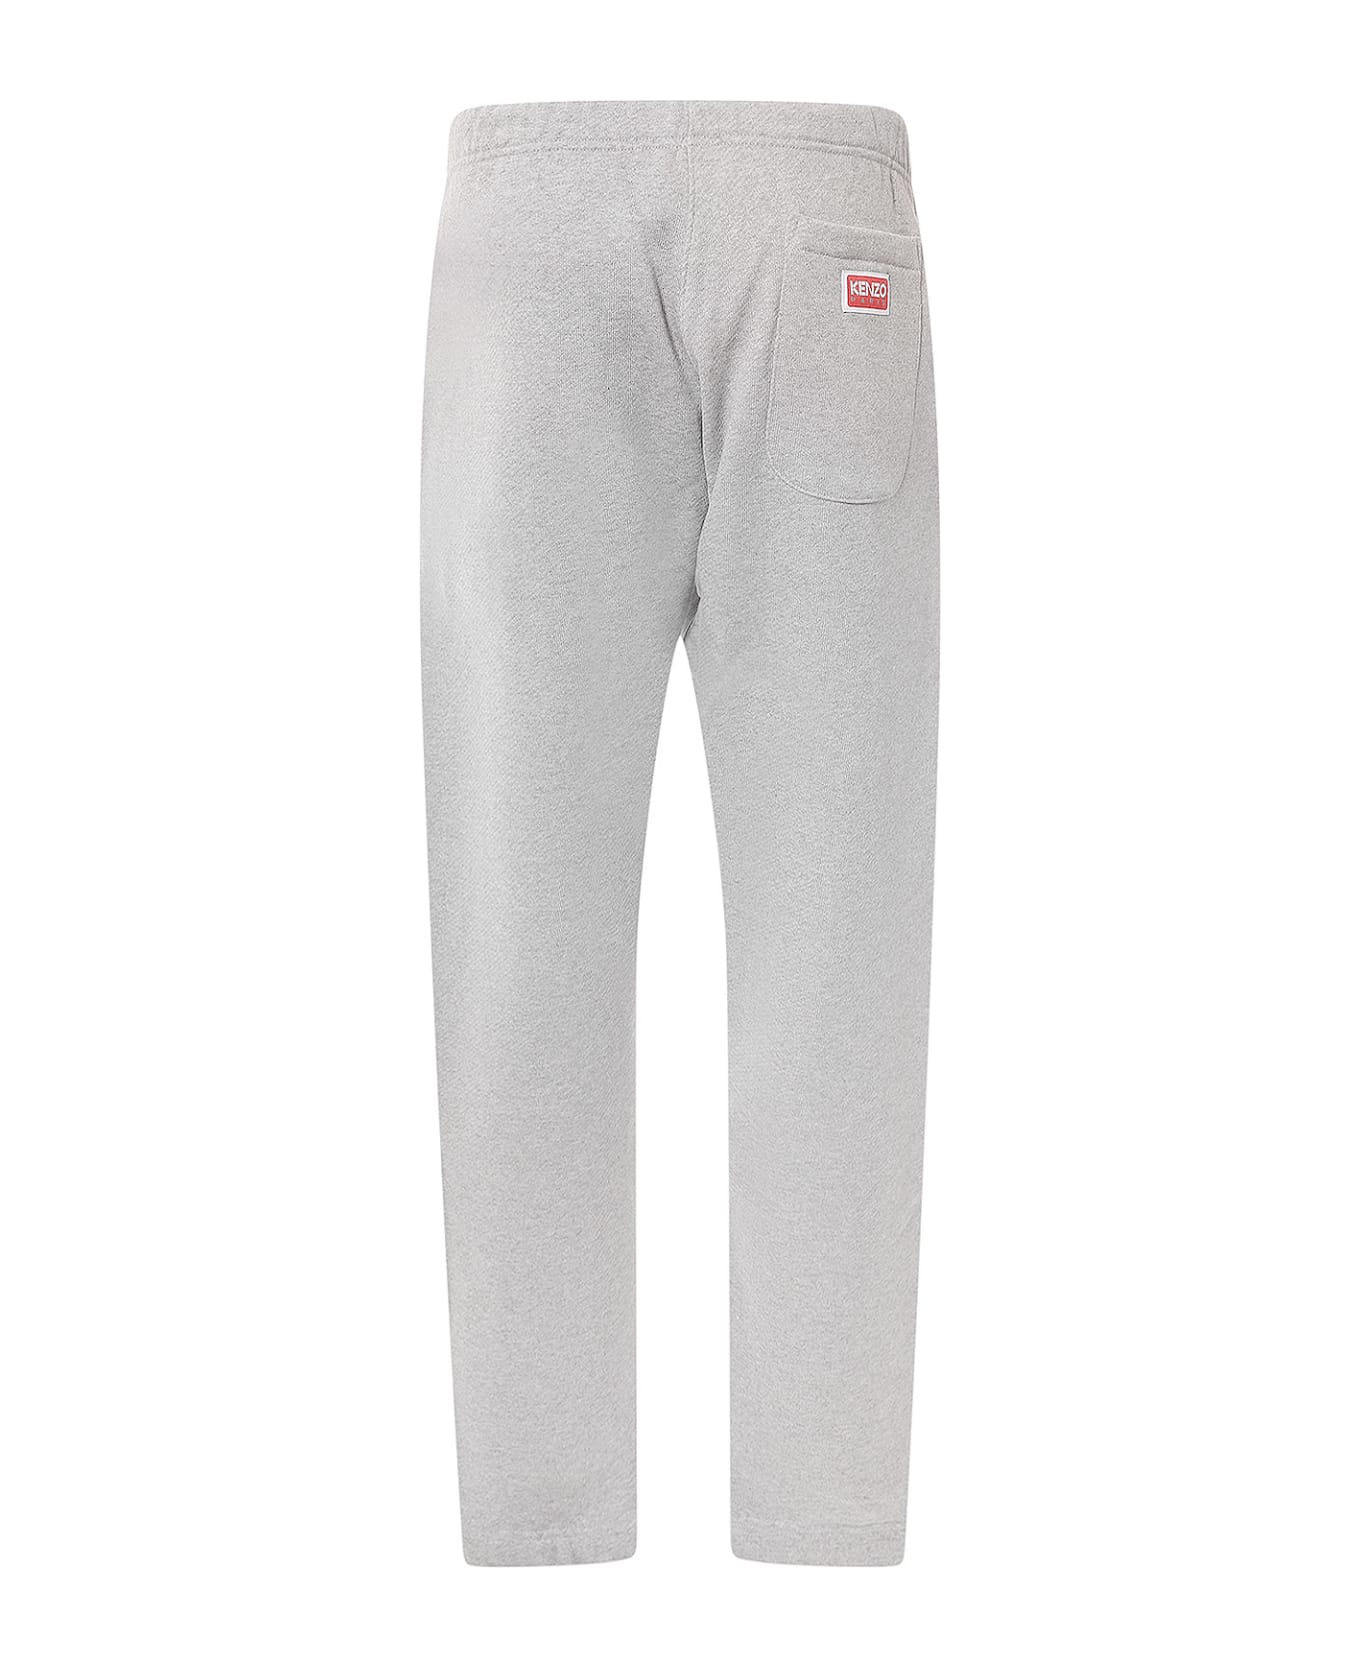 Kenzo Cotton Trouser - Grey